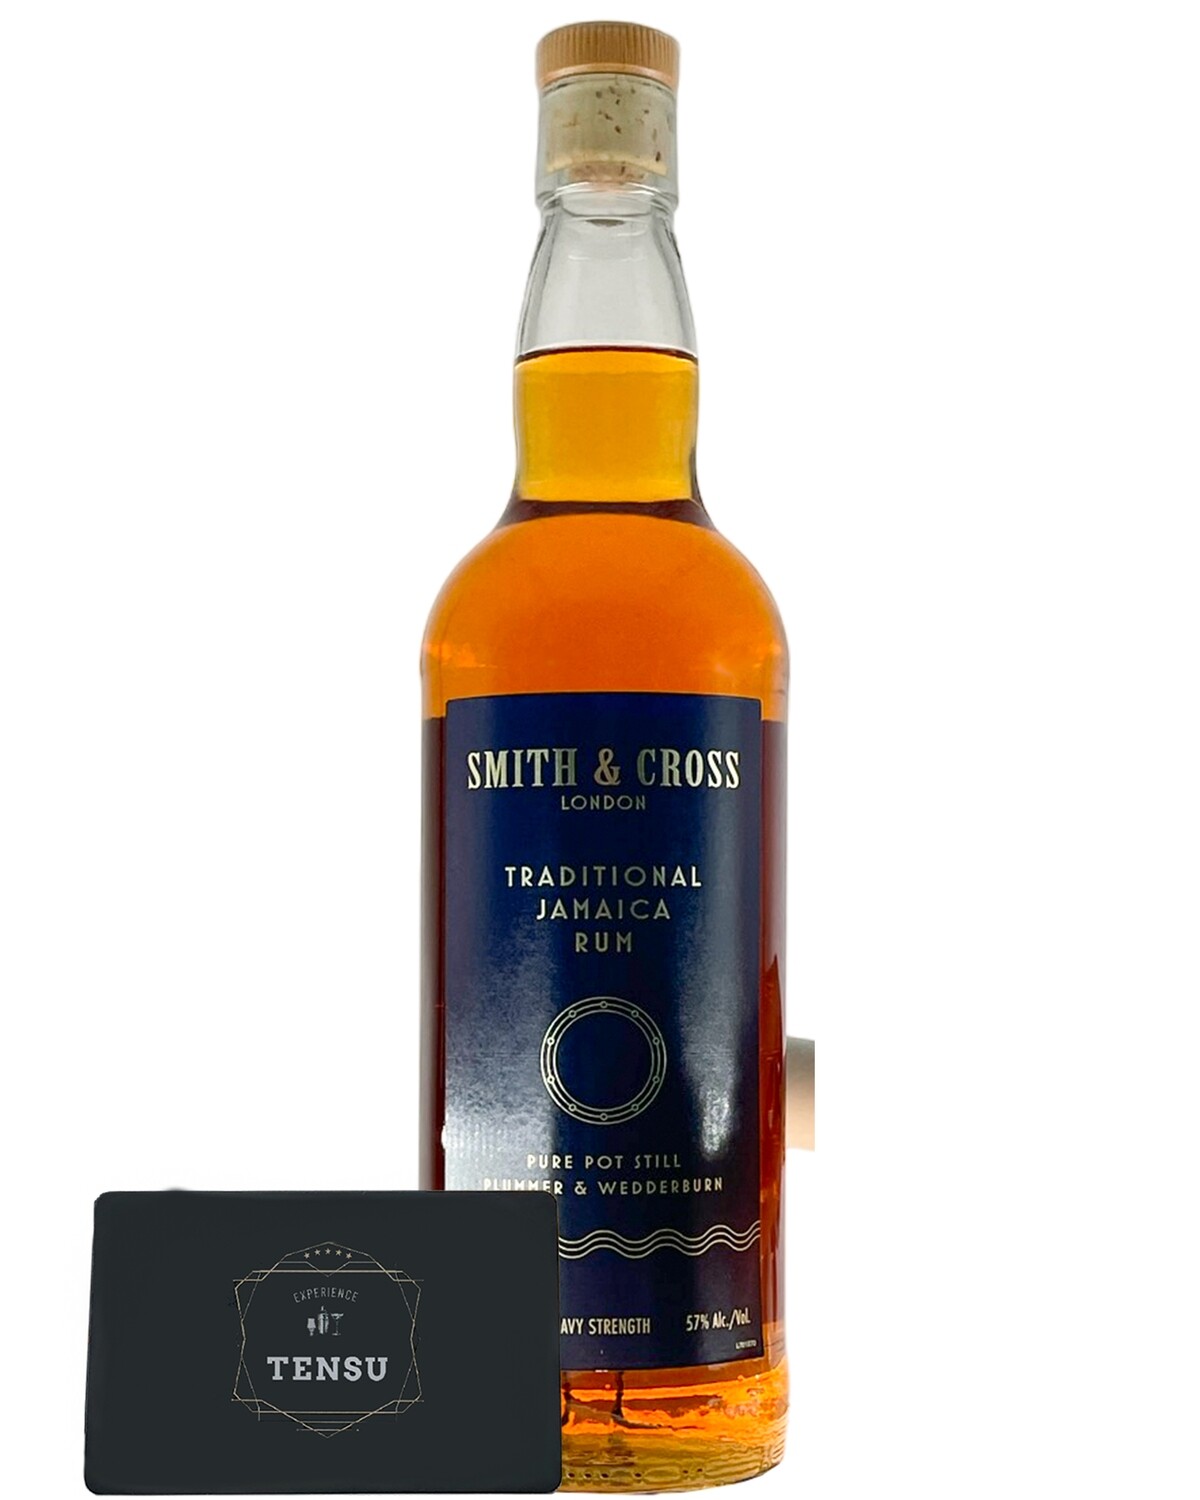 Smith & Cross Traditional Jamaica Rum Pure Pot Still -Plummer & Wedderburn- 57.0 "Smith & Cross"